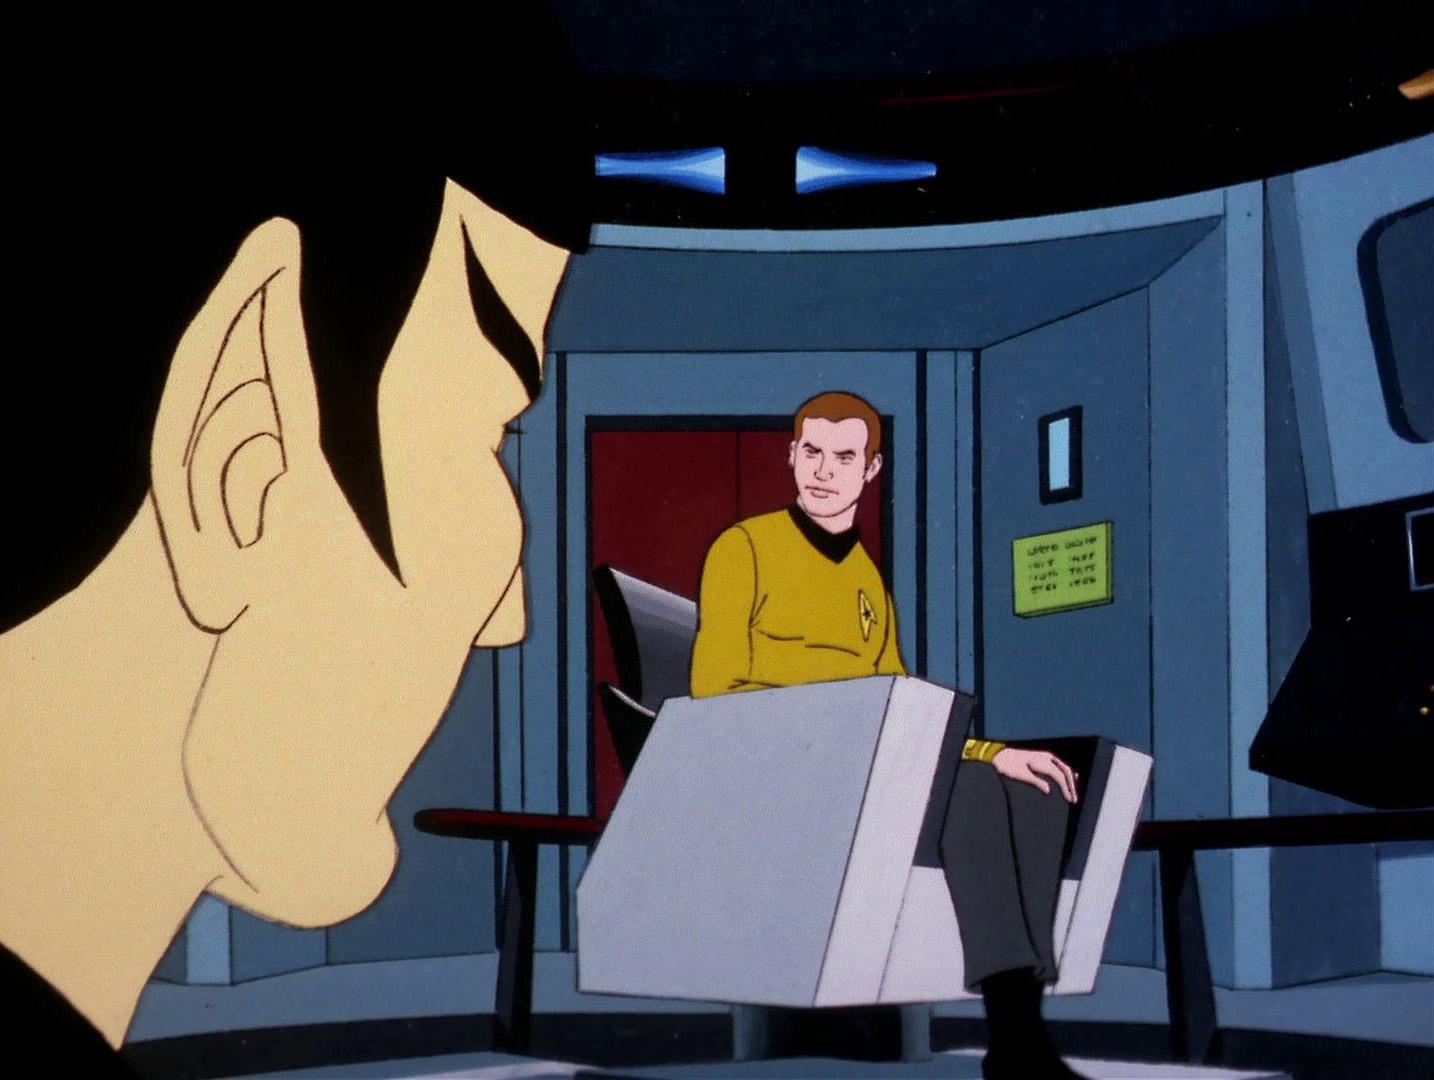 Star Trek animated Series. ROBOMASTERS the animated Series. Dick falls